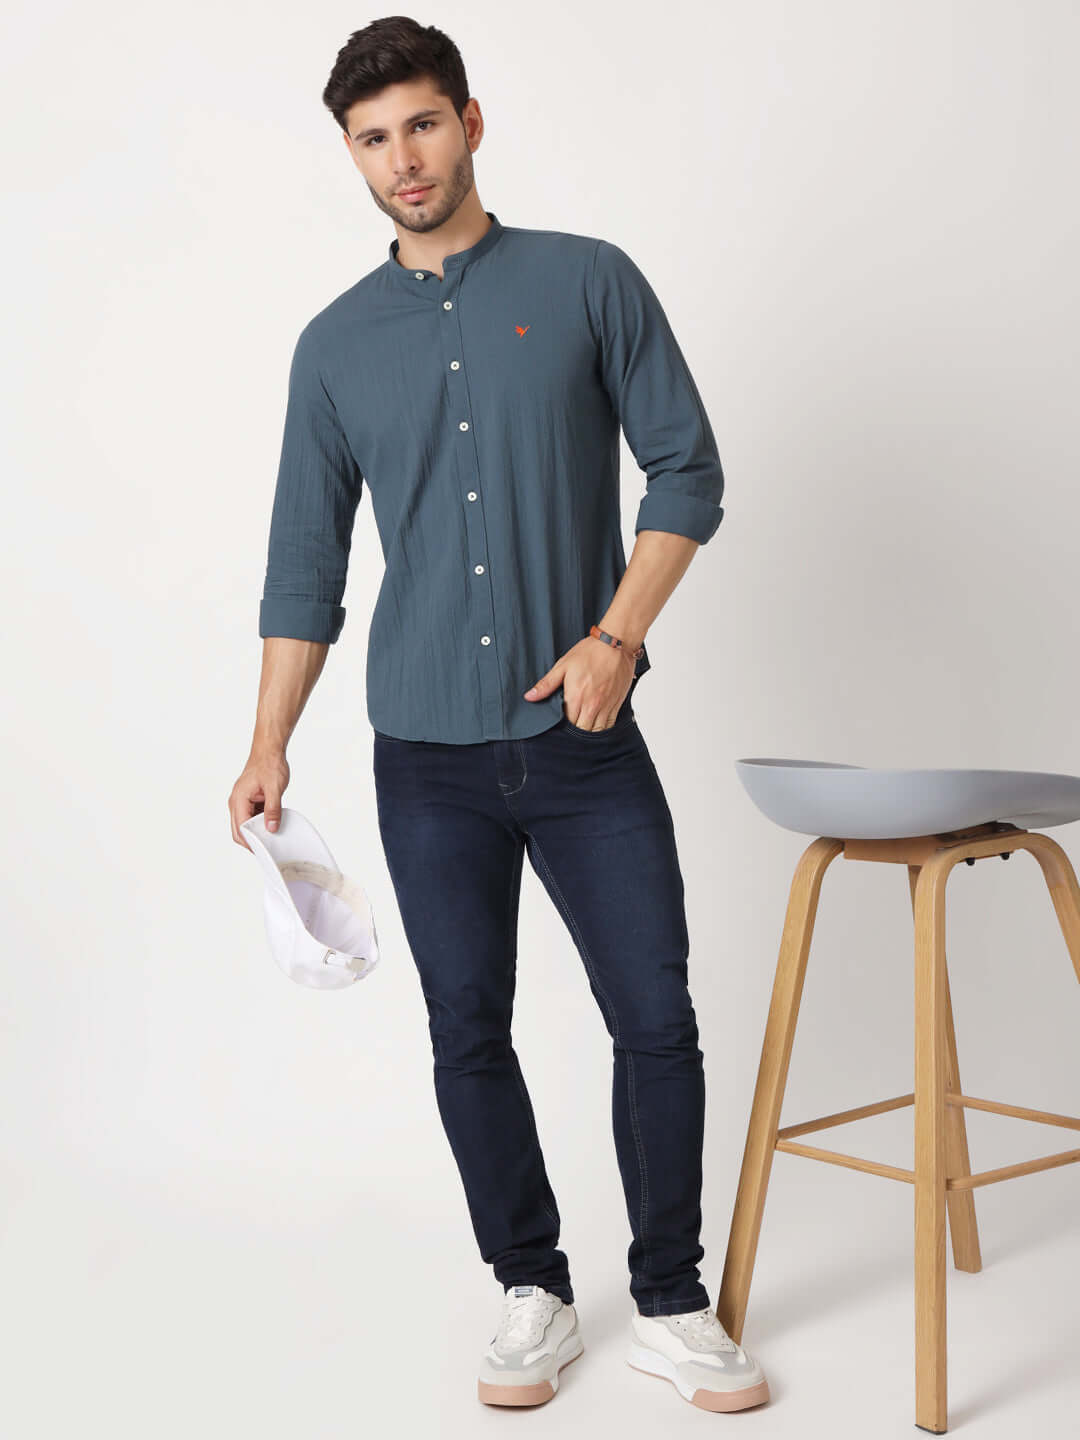 Amswan Premium Men's Blue Crinkle Cotton Shirt - Mandarin Collar, Long Sleeves